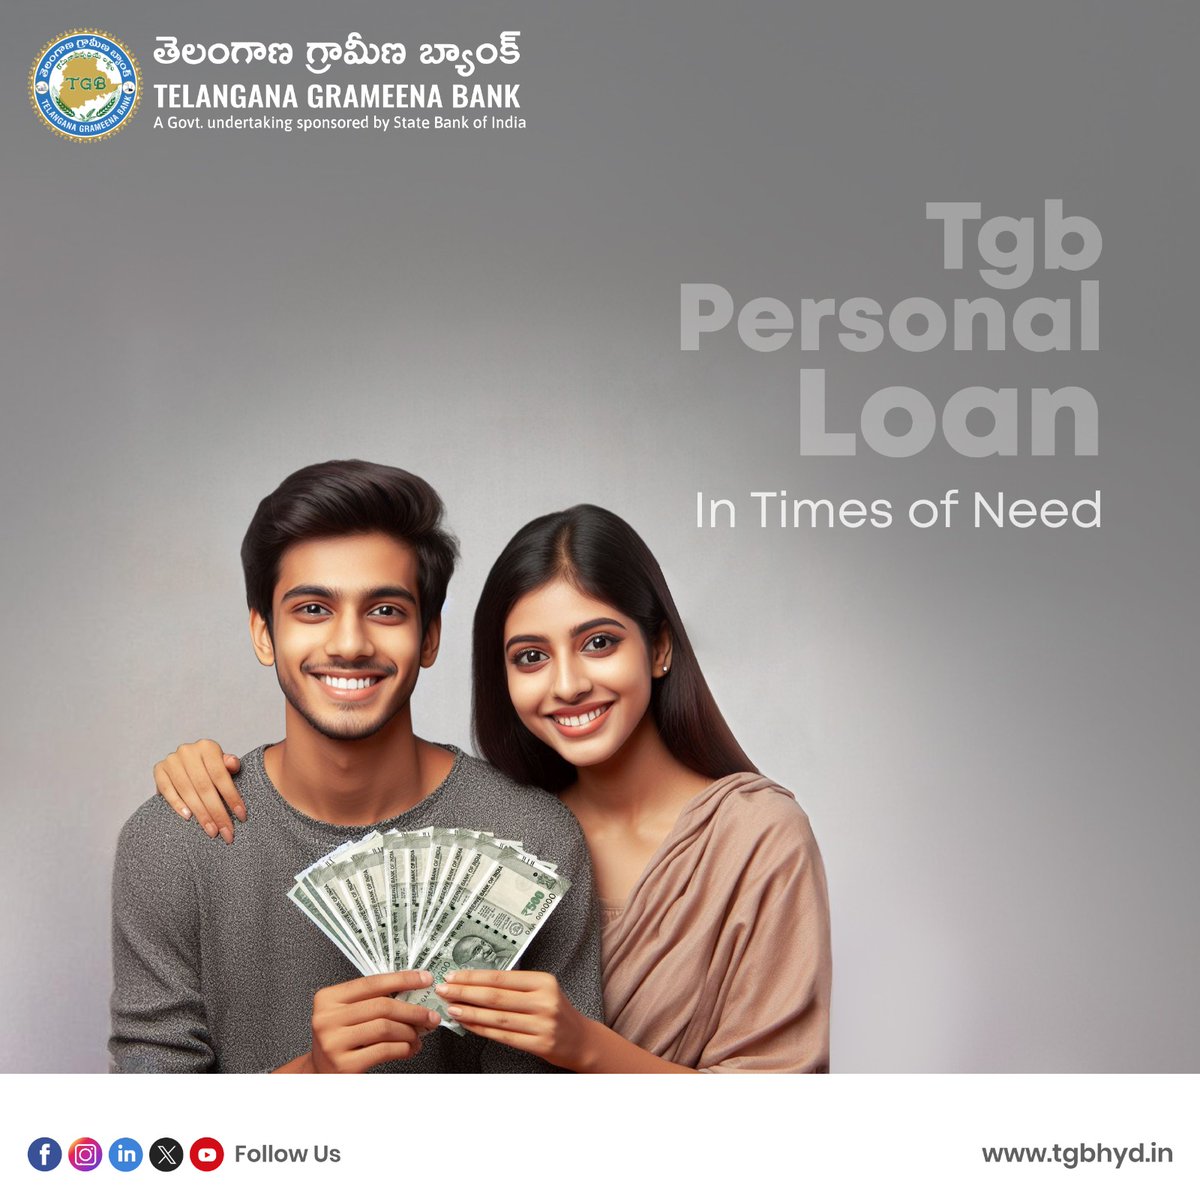 TGB Personal Loan. Contact your nearest branch for more details.

#TGBTalks #TGBCares #TGB #SBI #PersonalLoan #Loan #InterestRates #ROI